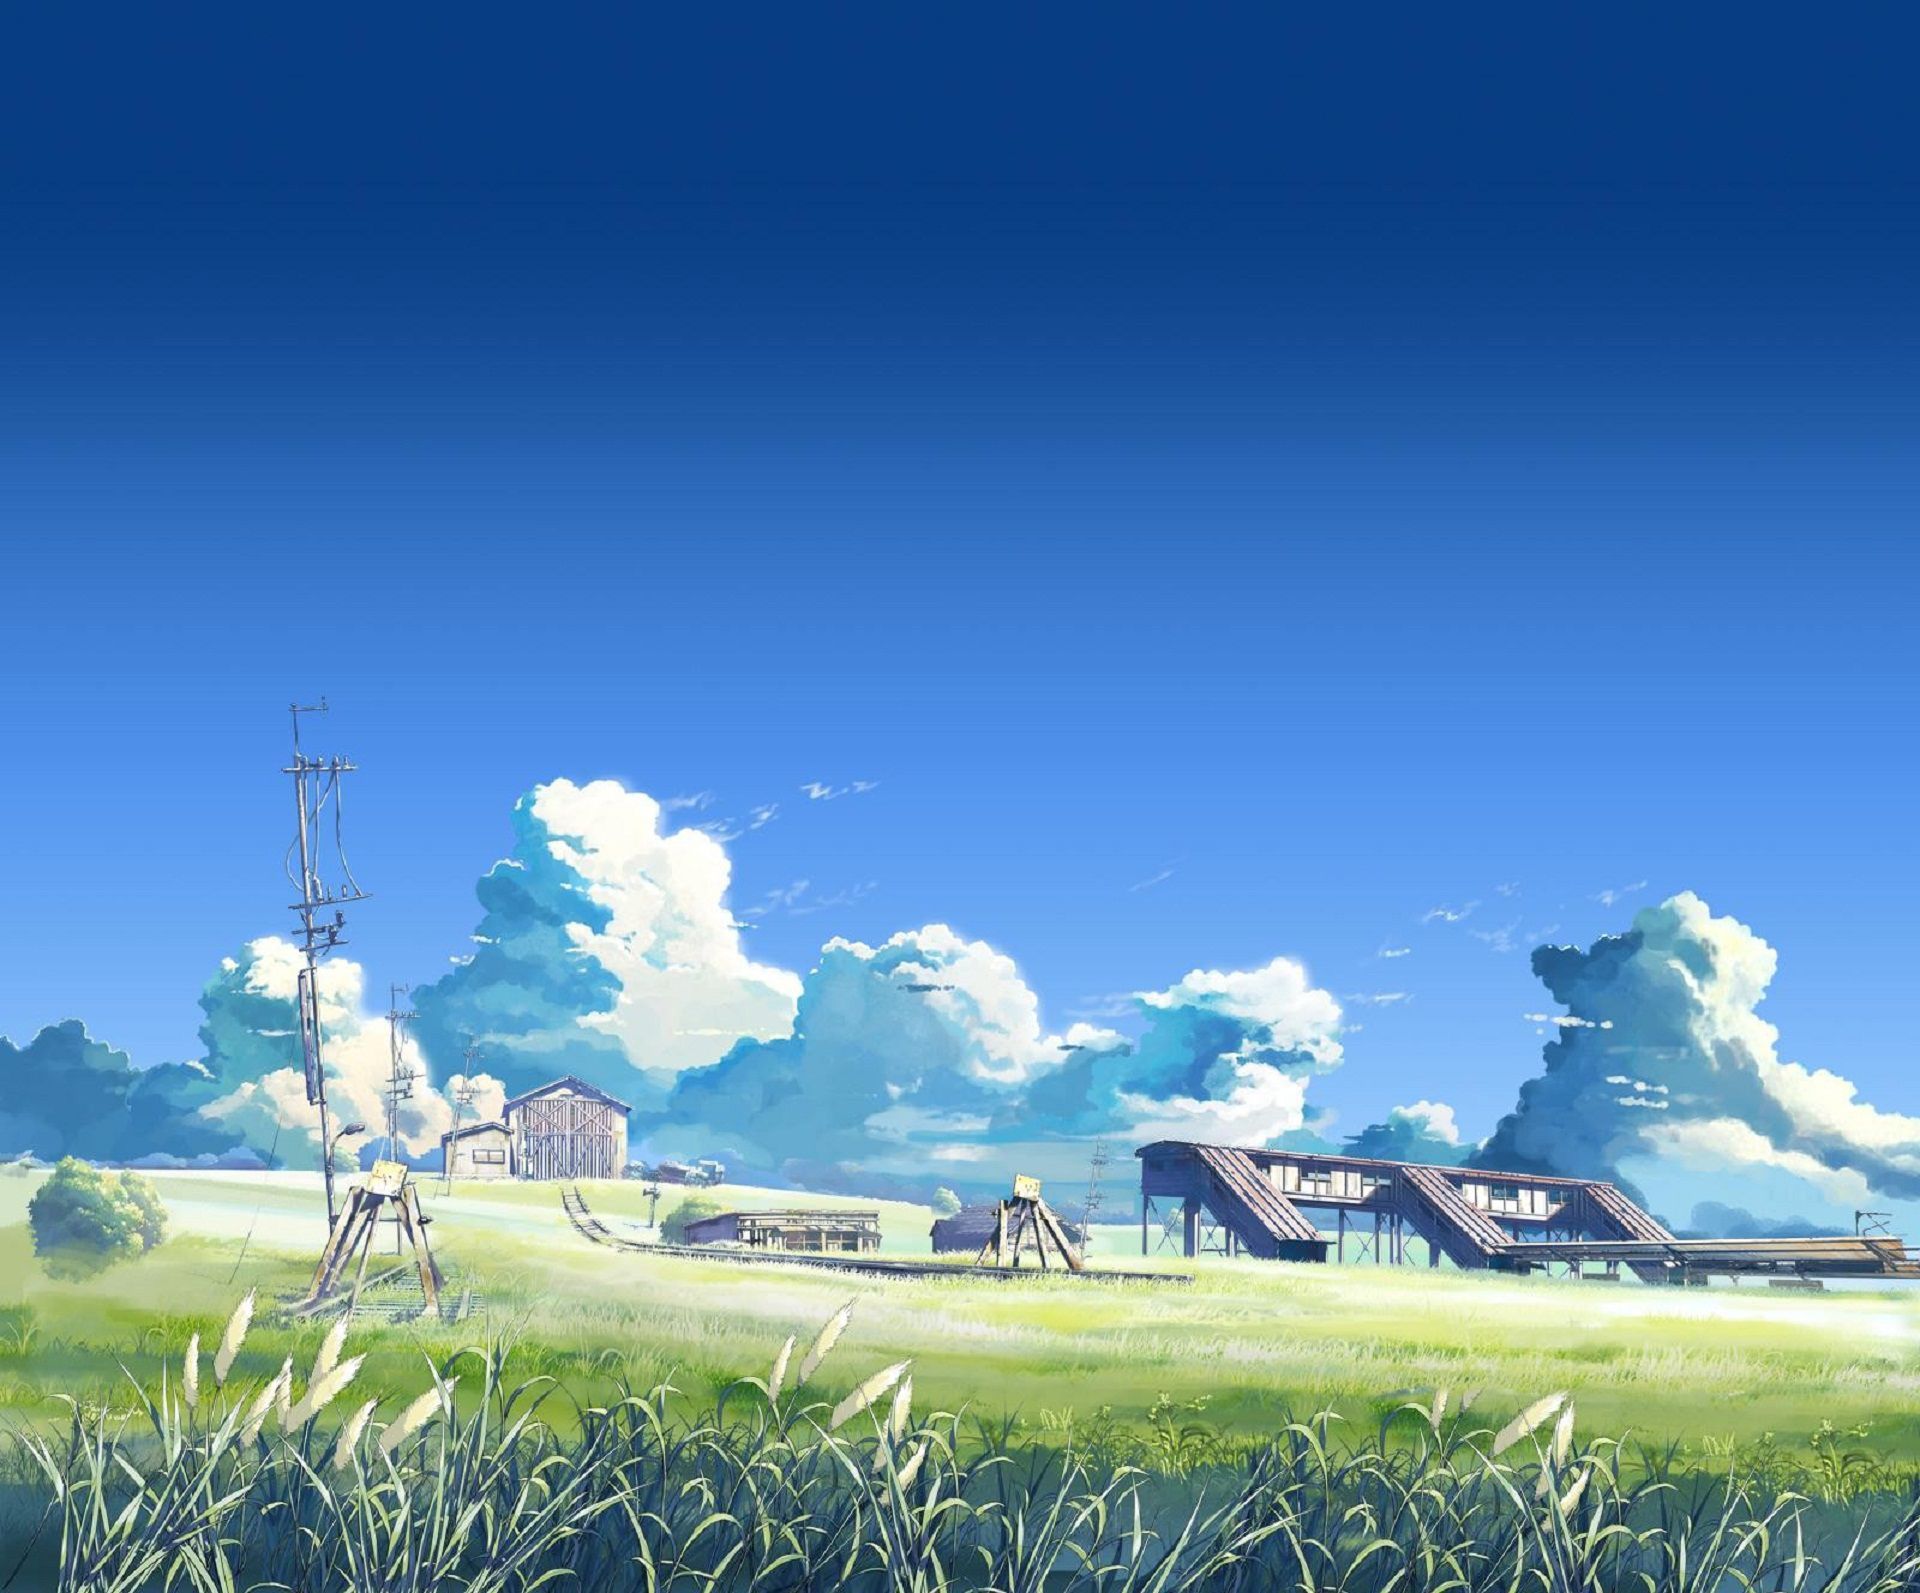 grassland concept art에 대한 이미지 검색결과. Anime scenery, Anime background, Clouds